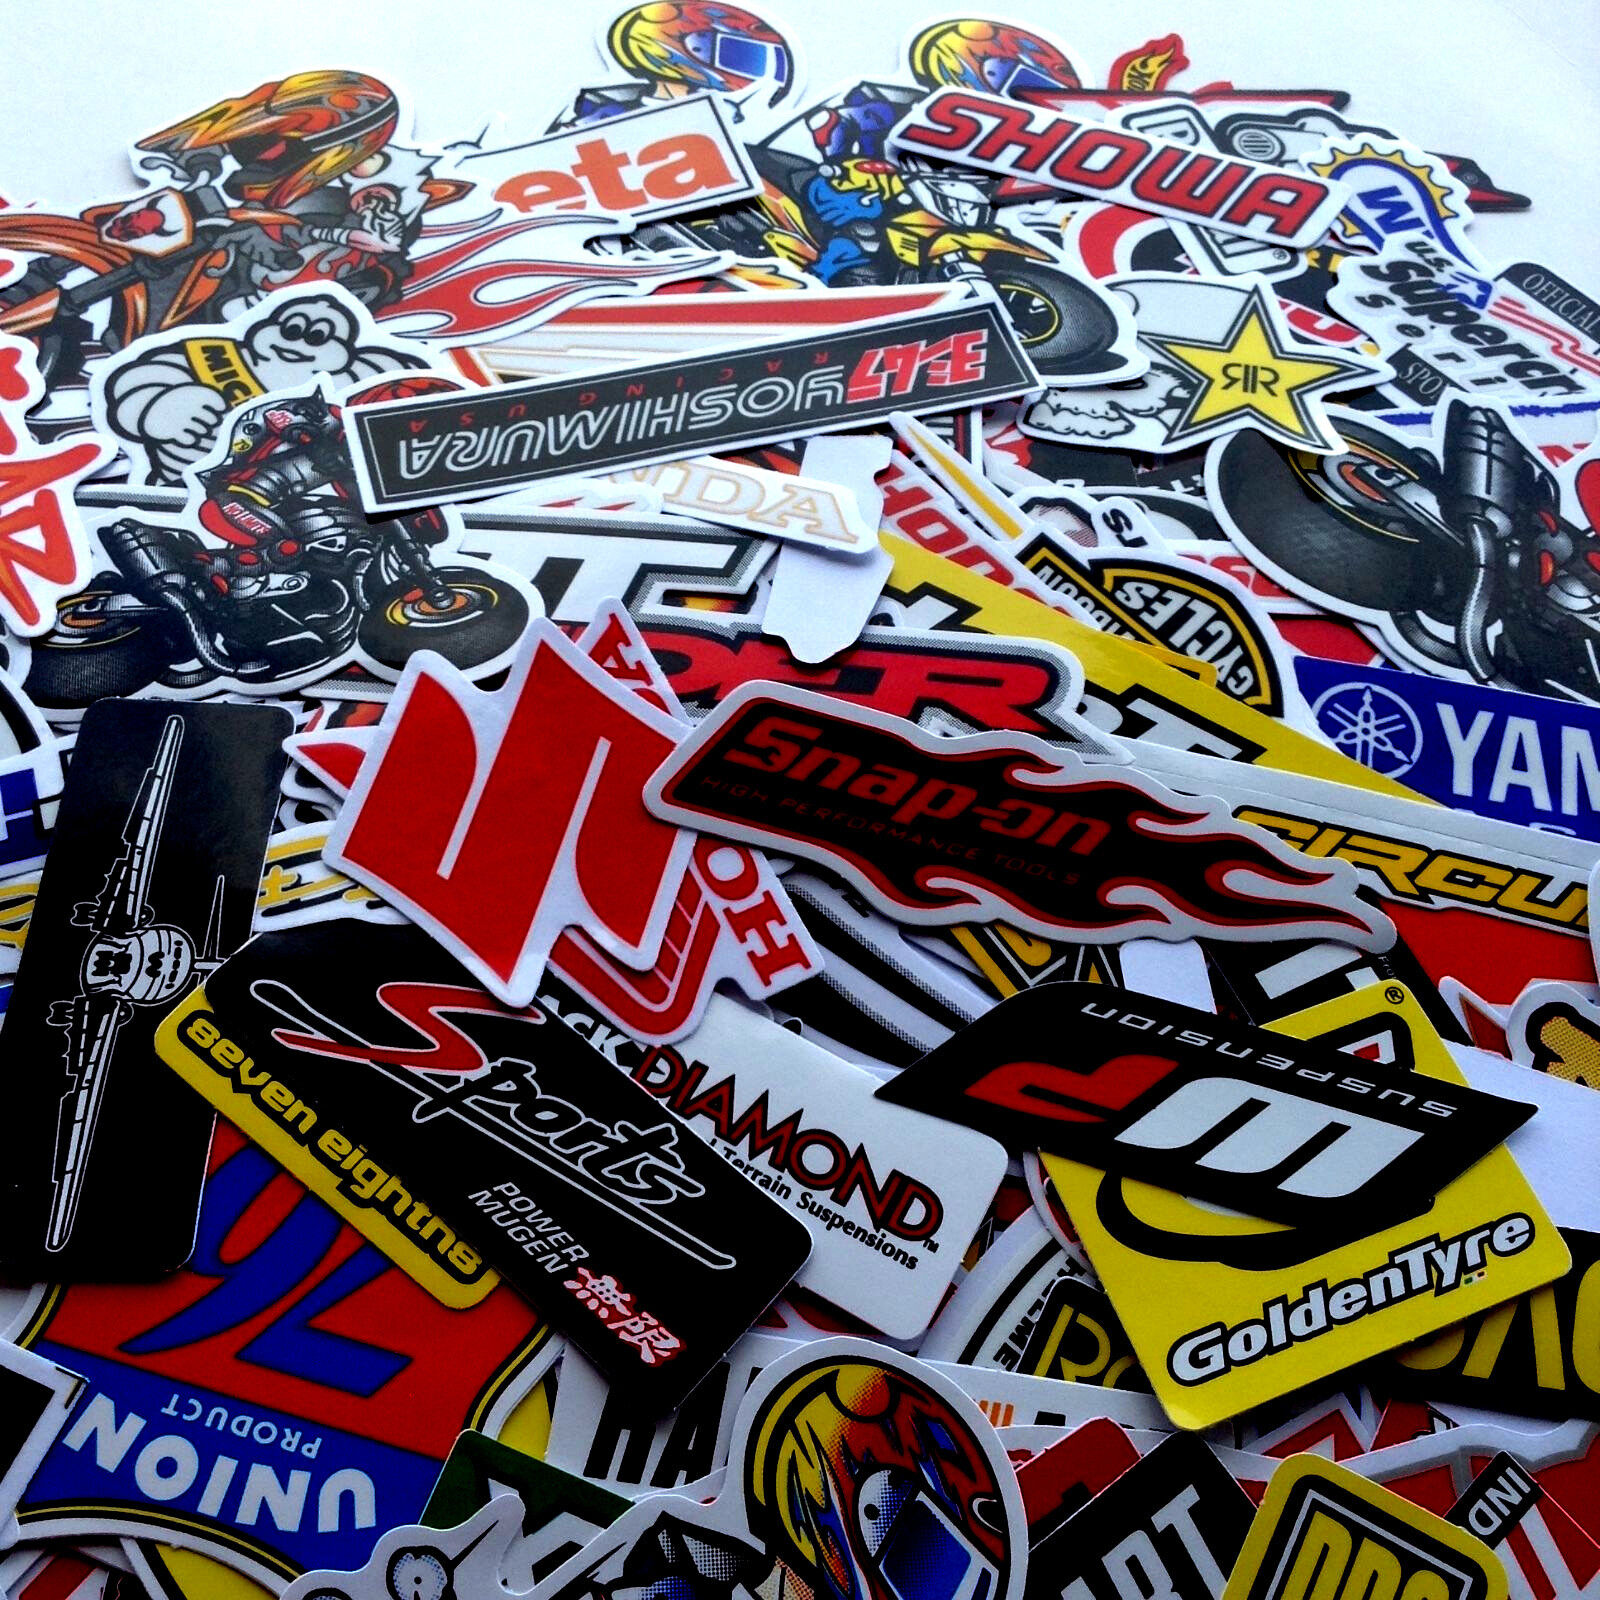 200 Random Mixed Sticker Decal Motocross Motorcycle Car ATV Racing Bike Helmet